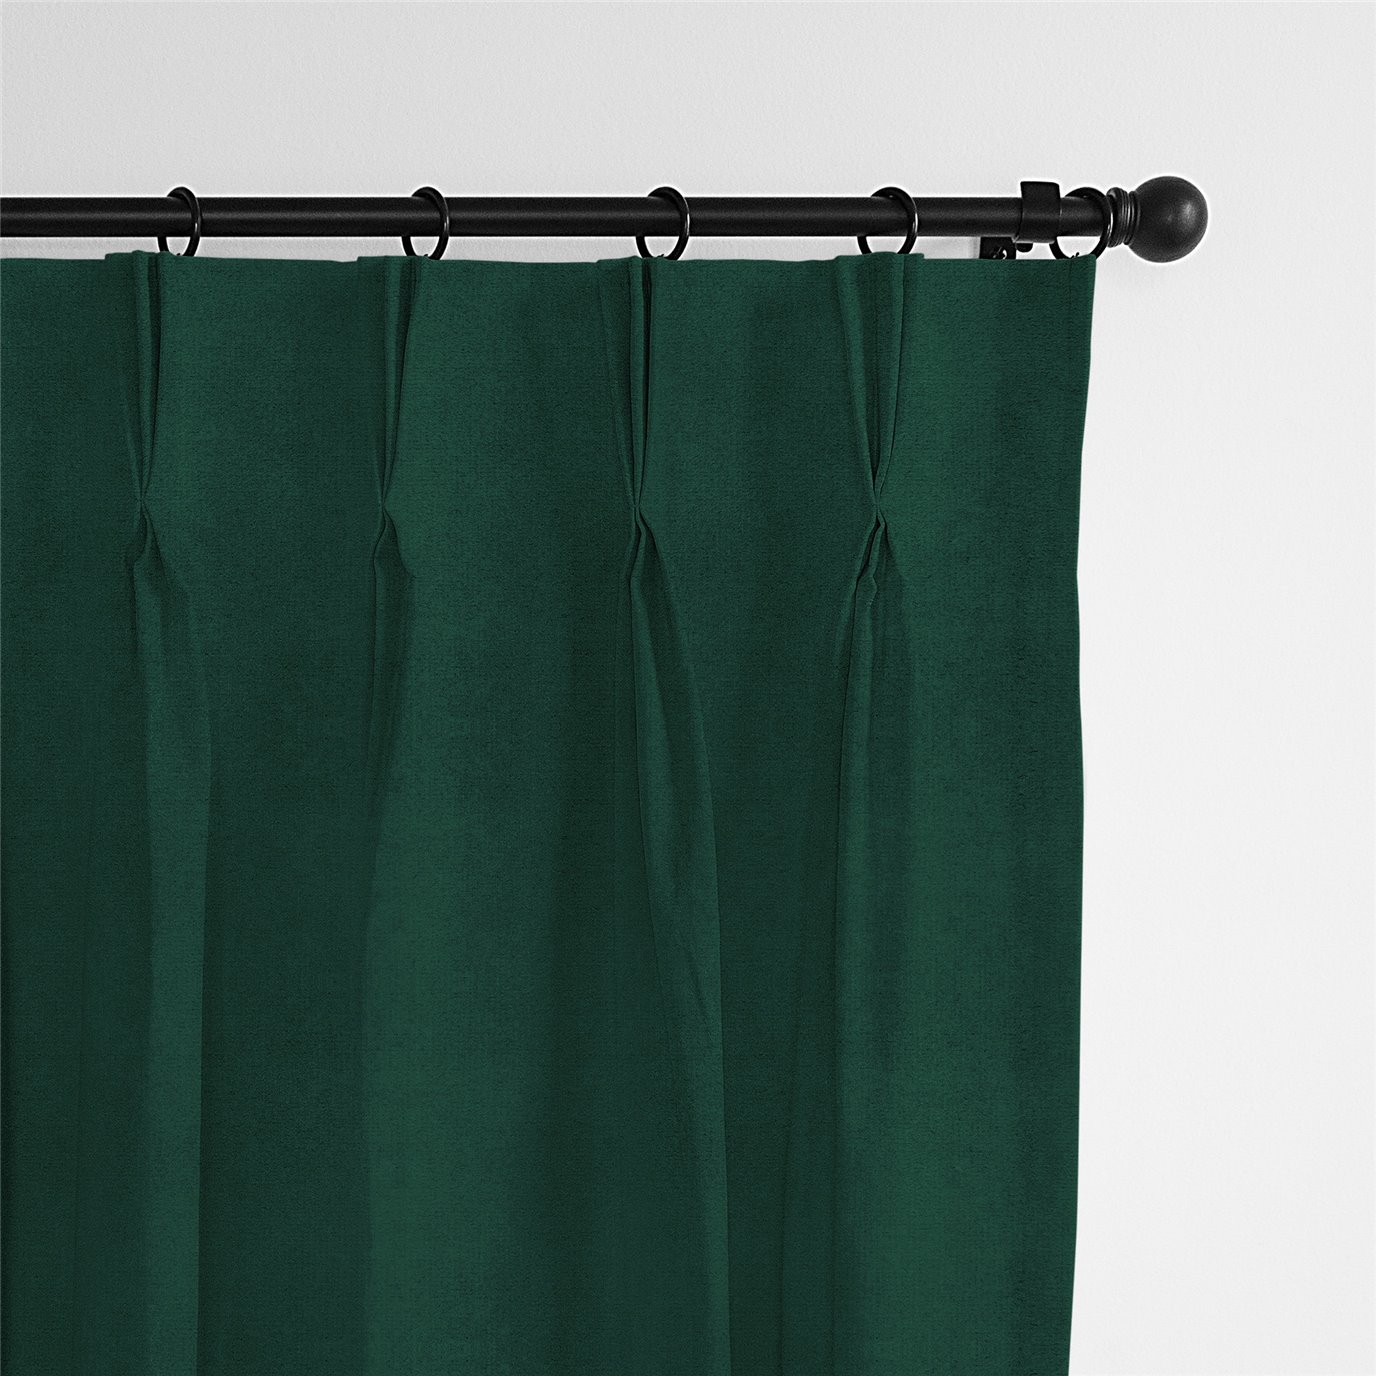 Vanessa Emerald Pinch Pleat Drapery Panel - Pair - Size 40"x144"